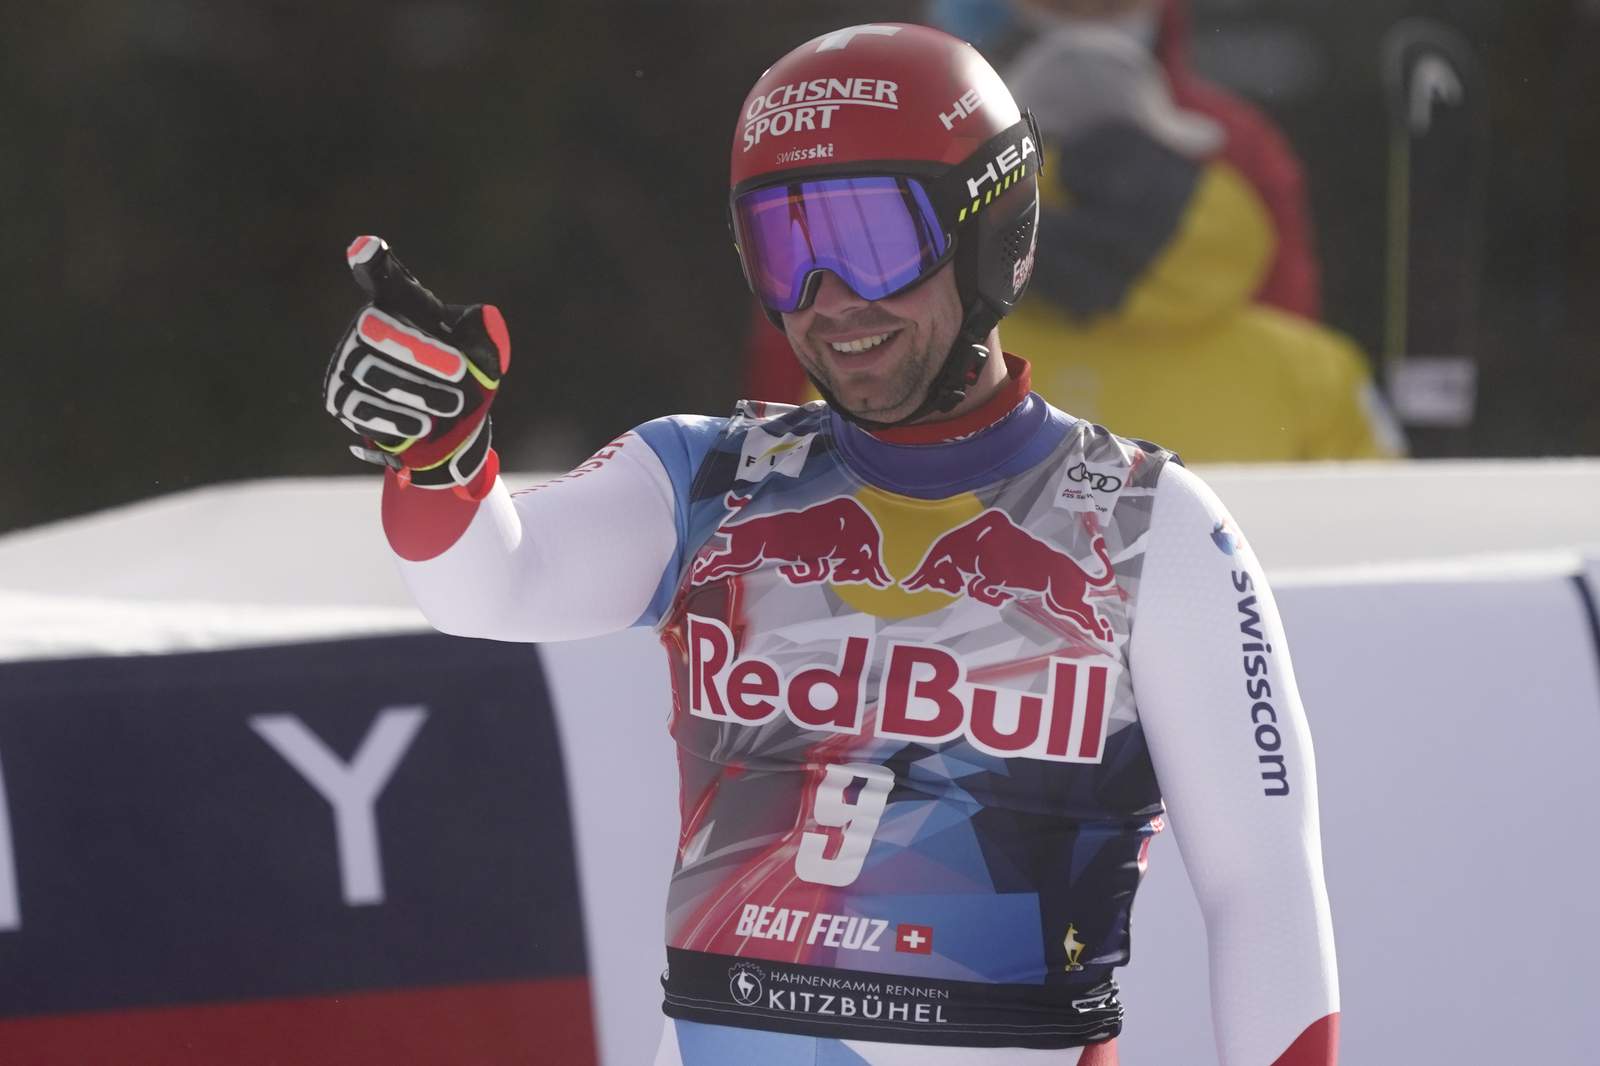 Swiss skier Beat Feuz wins 2nd Kitzbühel downhill in 3 days